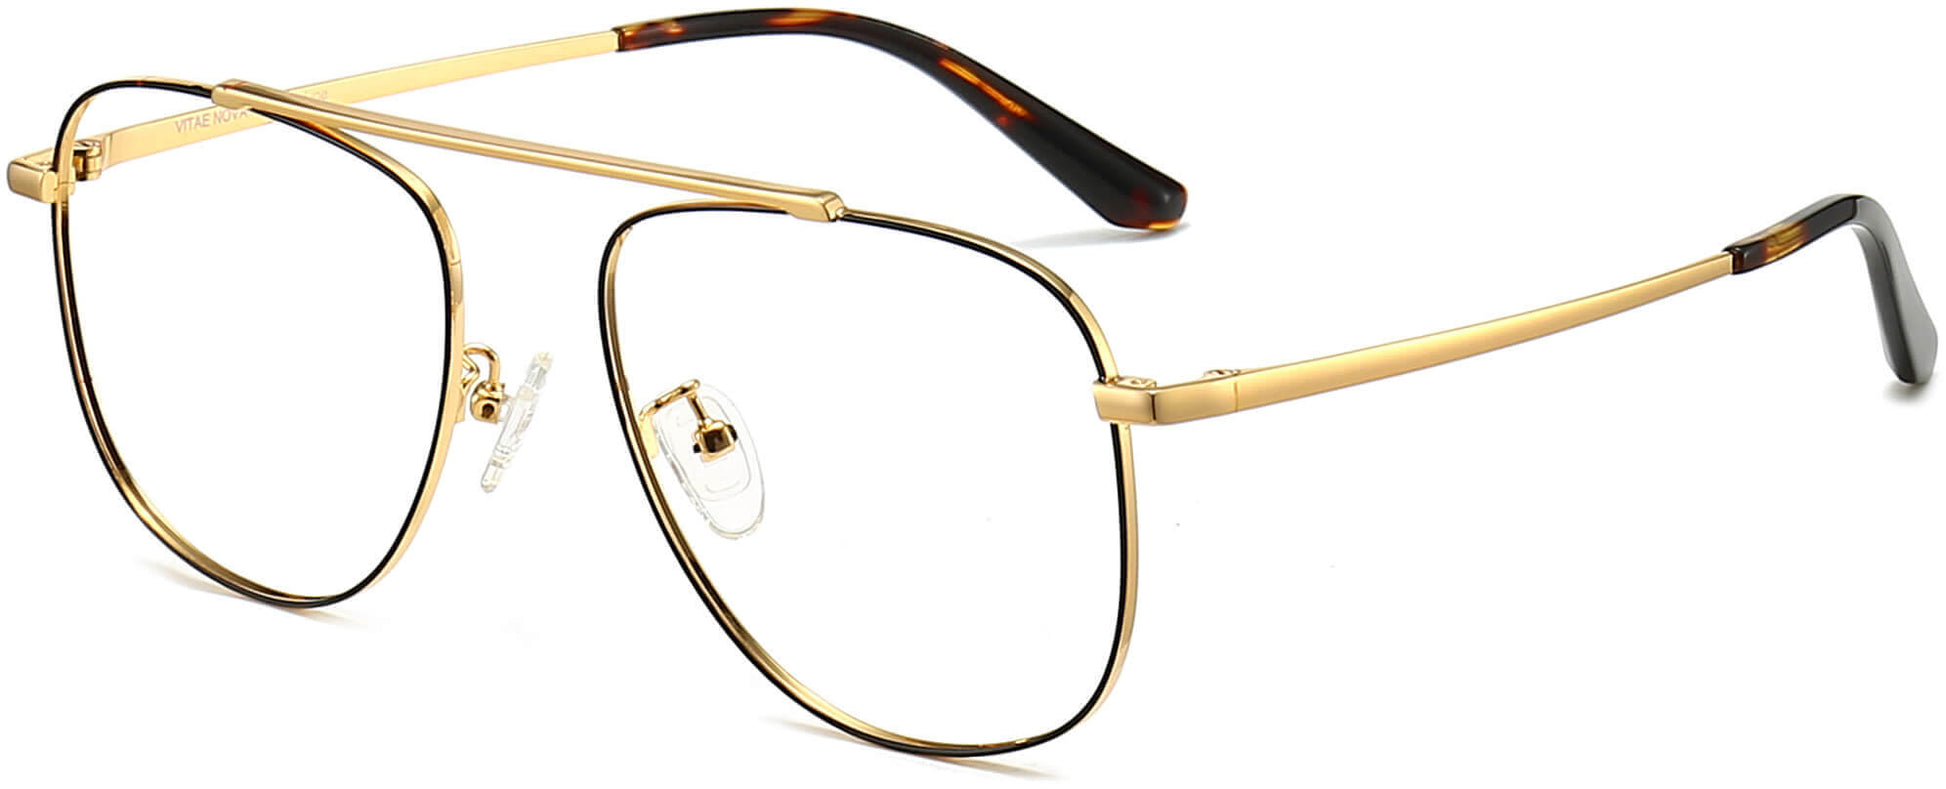 Vanessa Aviator Gold Eyeglasses from ANRRI, angle view